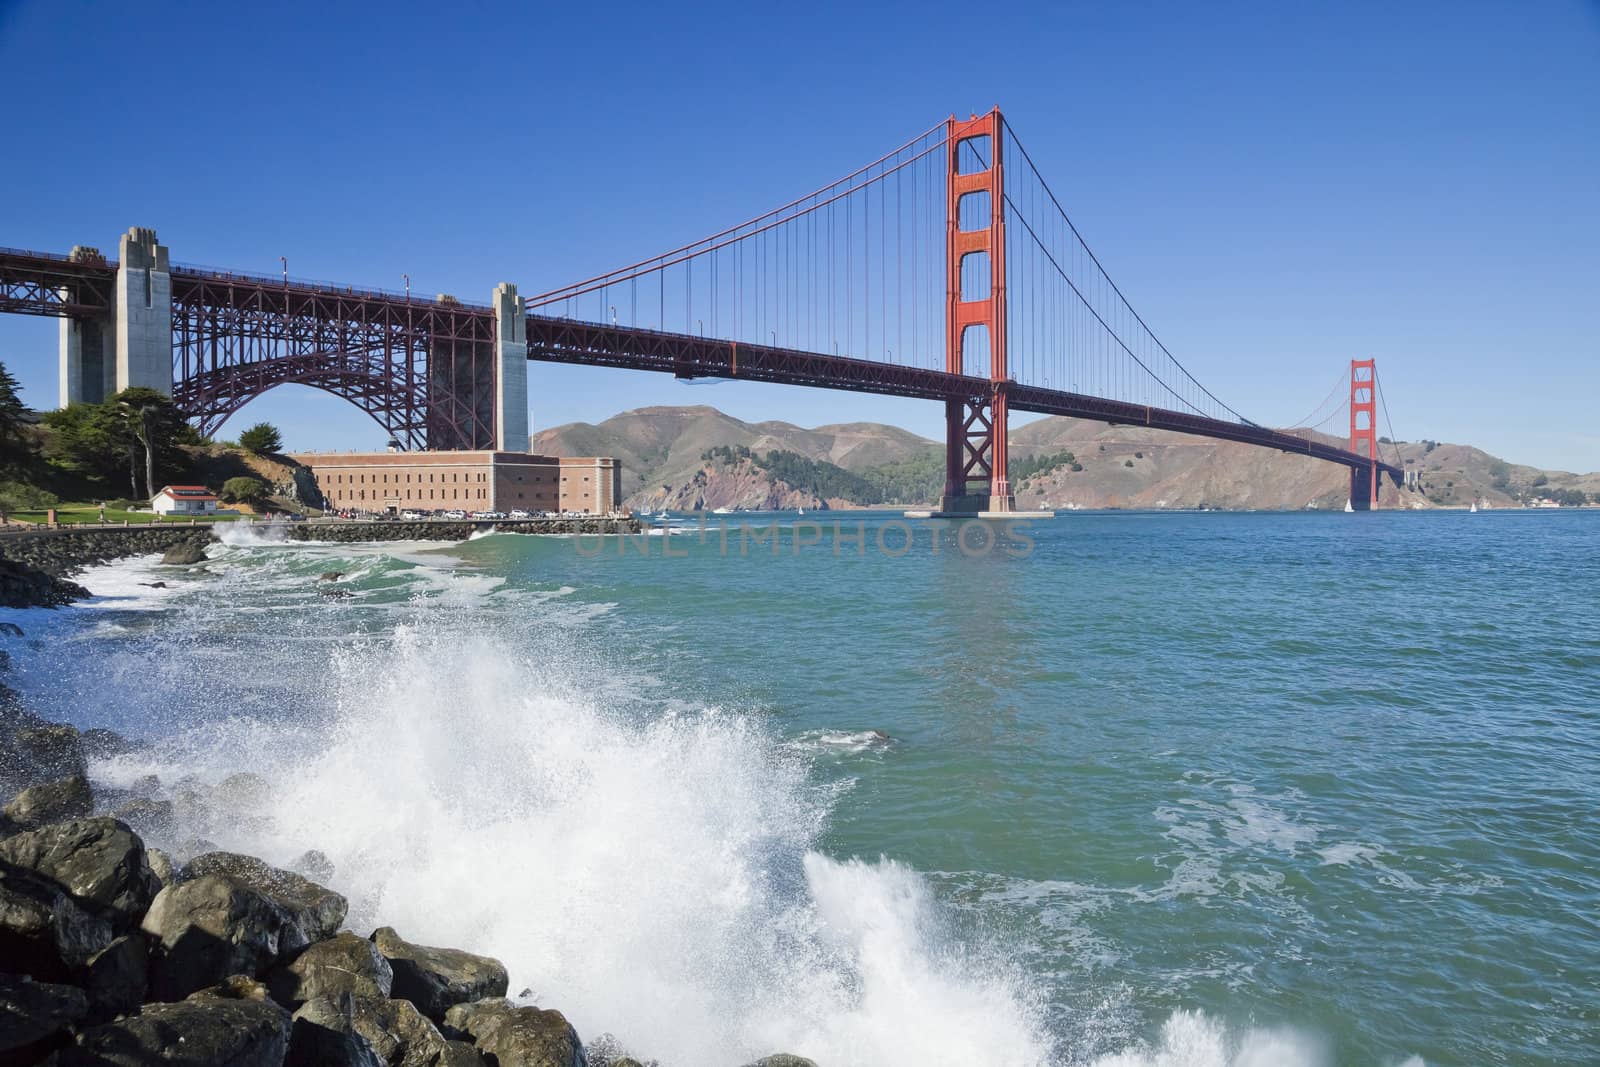 The Golden Gate Bridge w the waves by hanusst